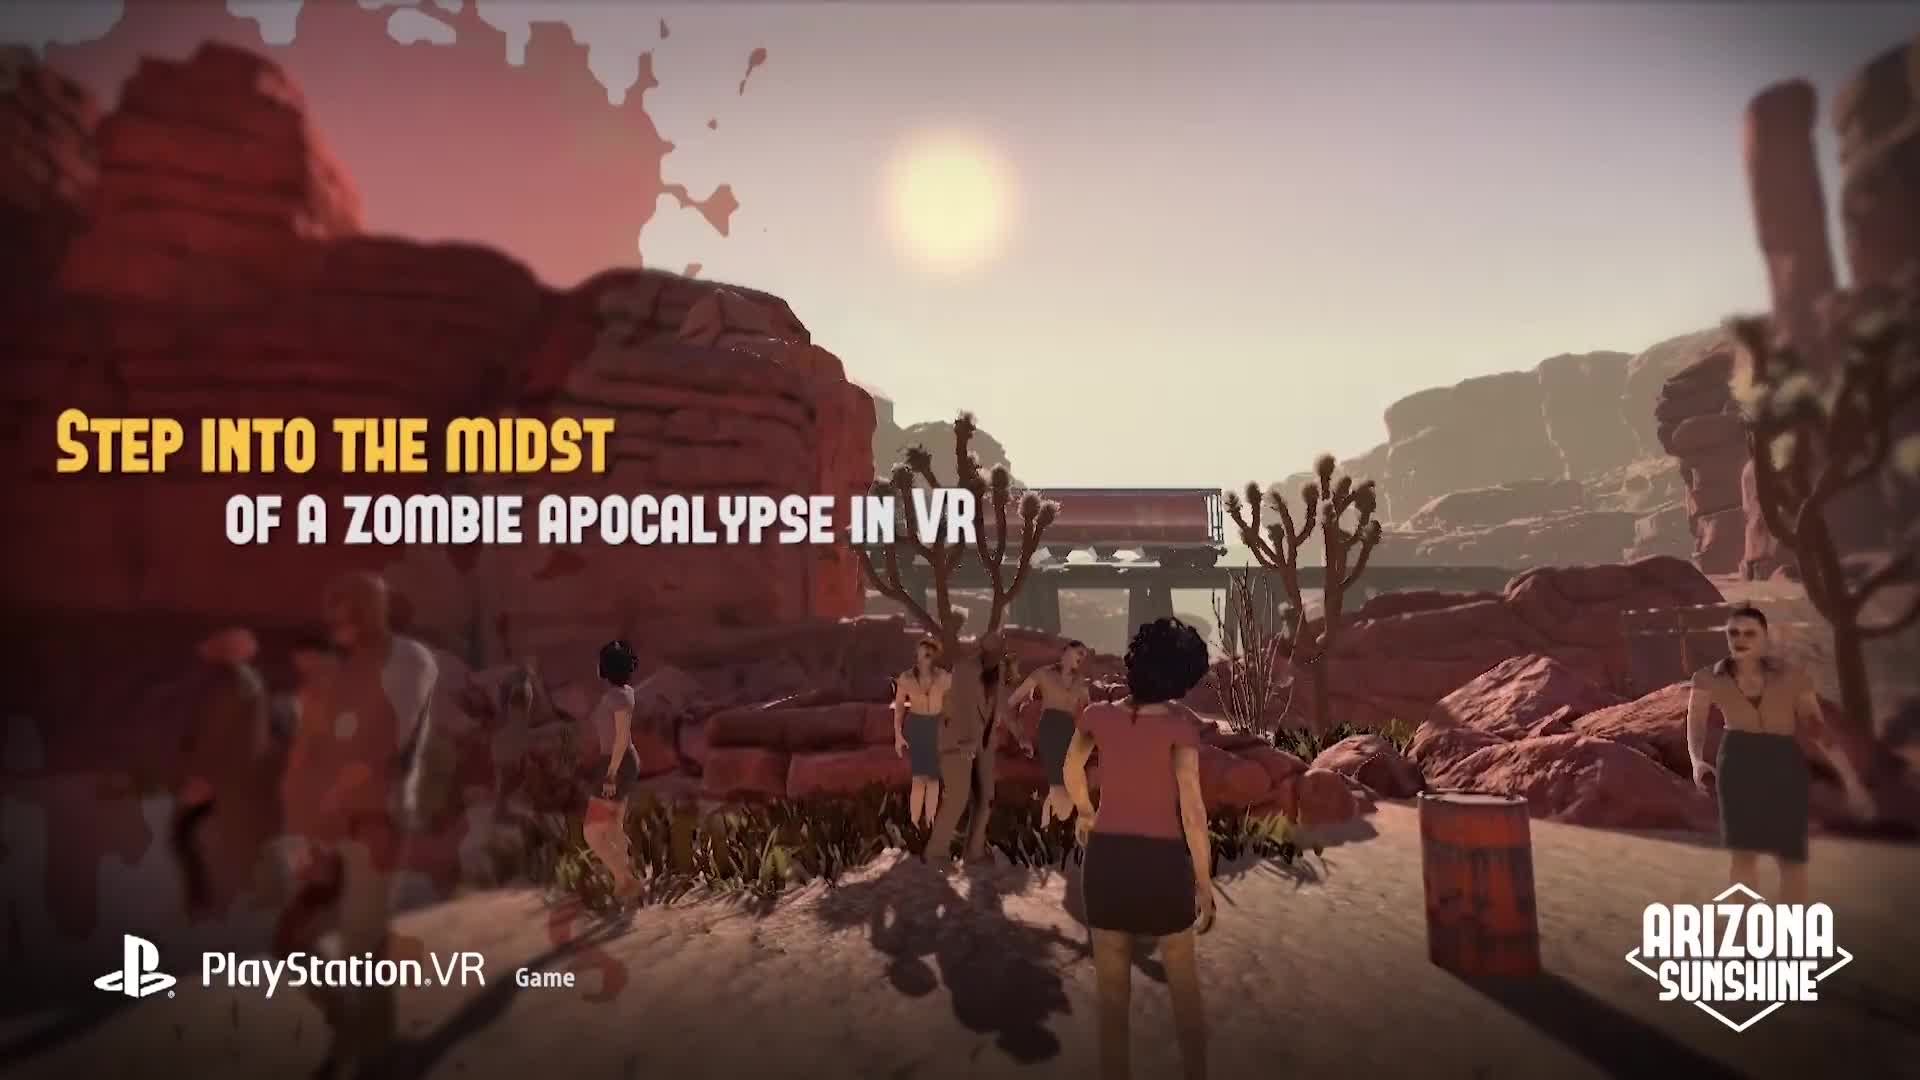 Arizona Sunshine - PS VR launch trailer